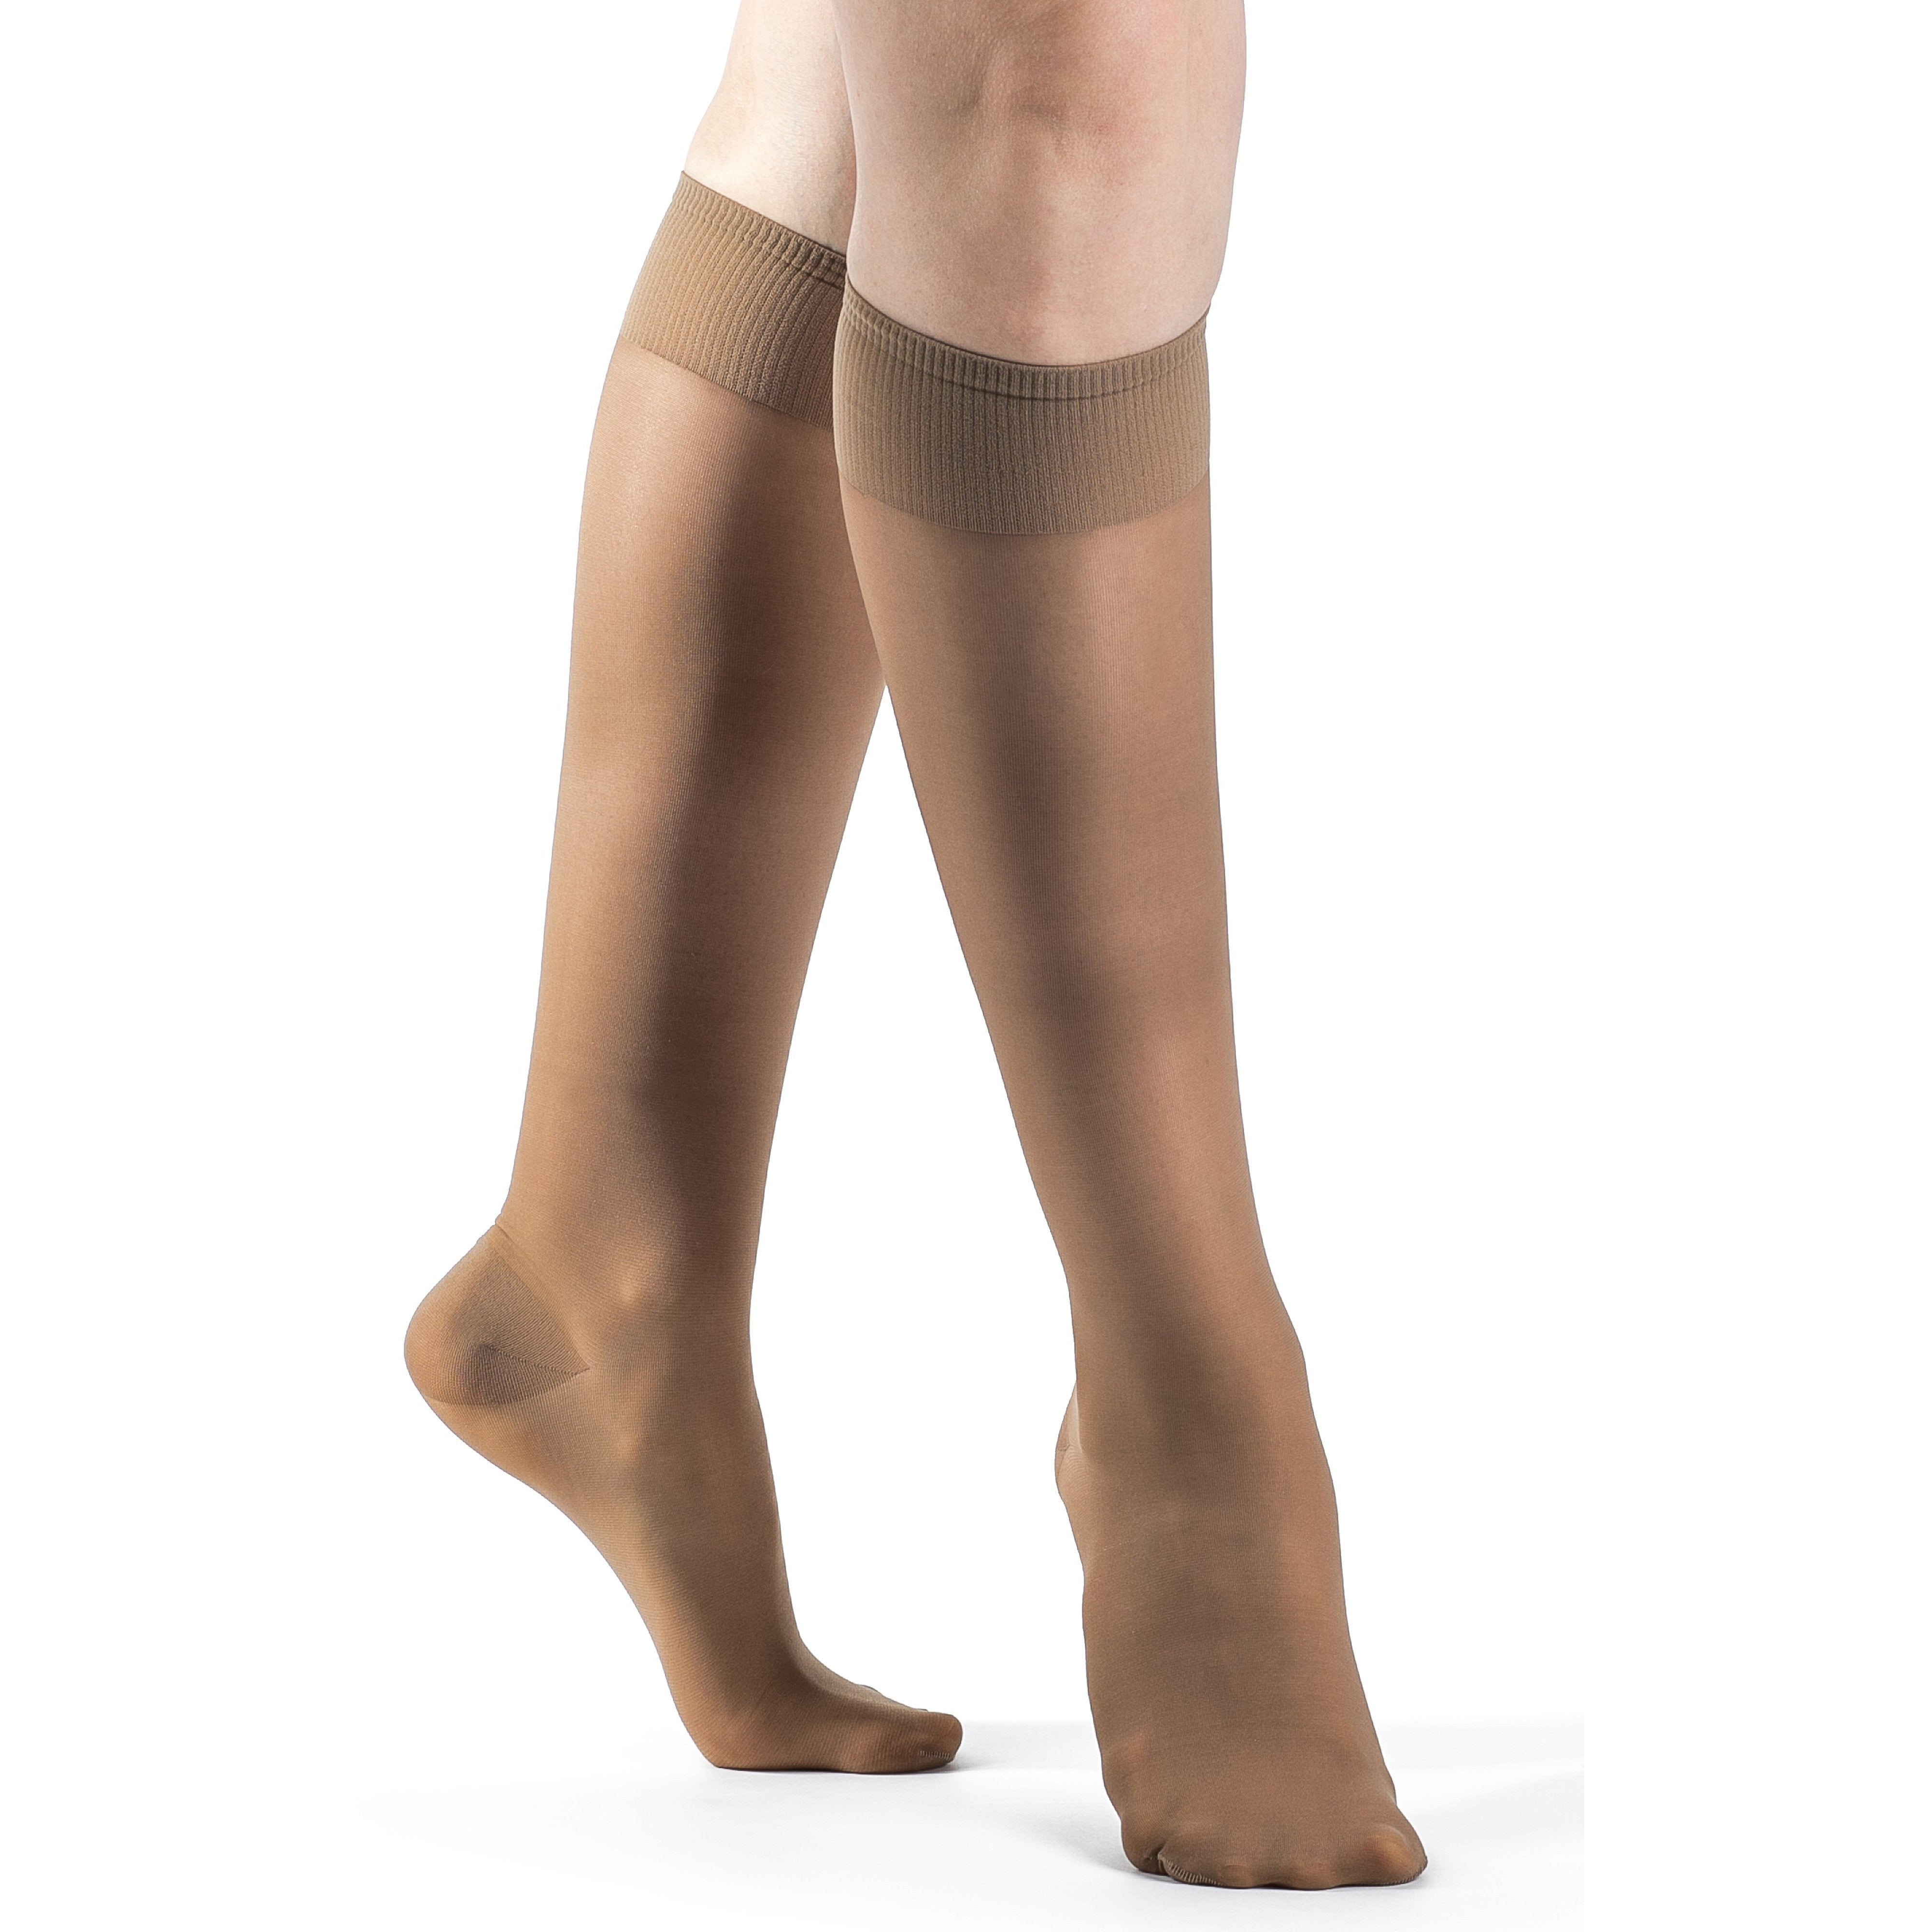 Sigvaris Sheer Fashion Pantyhose Compression Stockings 15-20 mmHg for